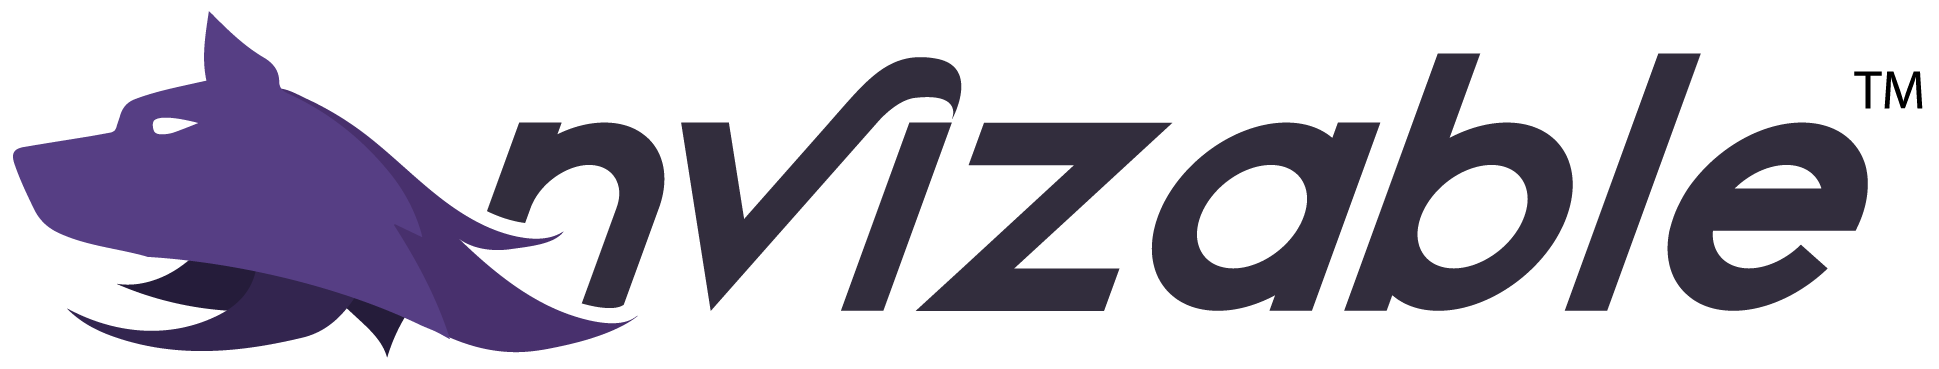 nVizable logo